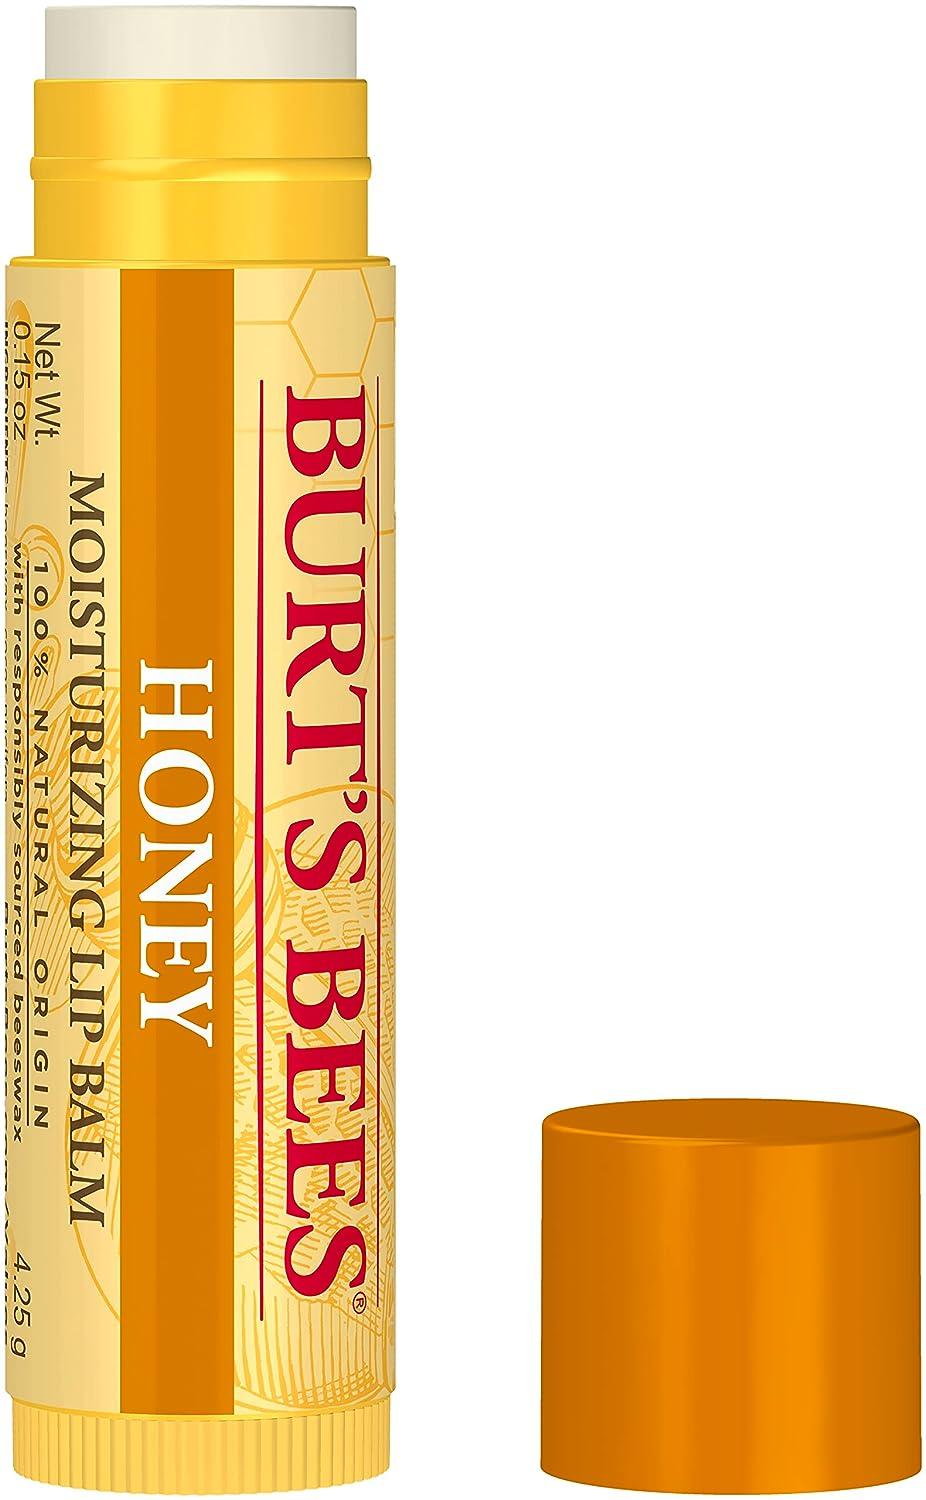 Burt's Bees 100% Natural Moisturizing Lip Balm Honey with Beeswax - 1 Tube  0.15 Ounce